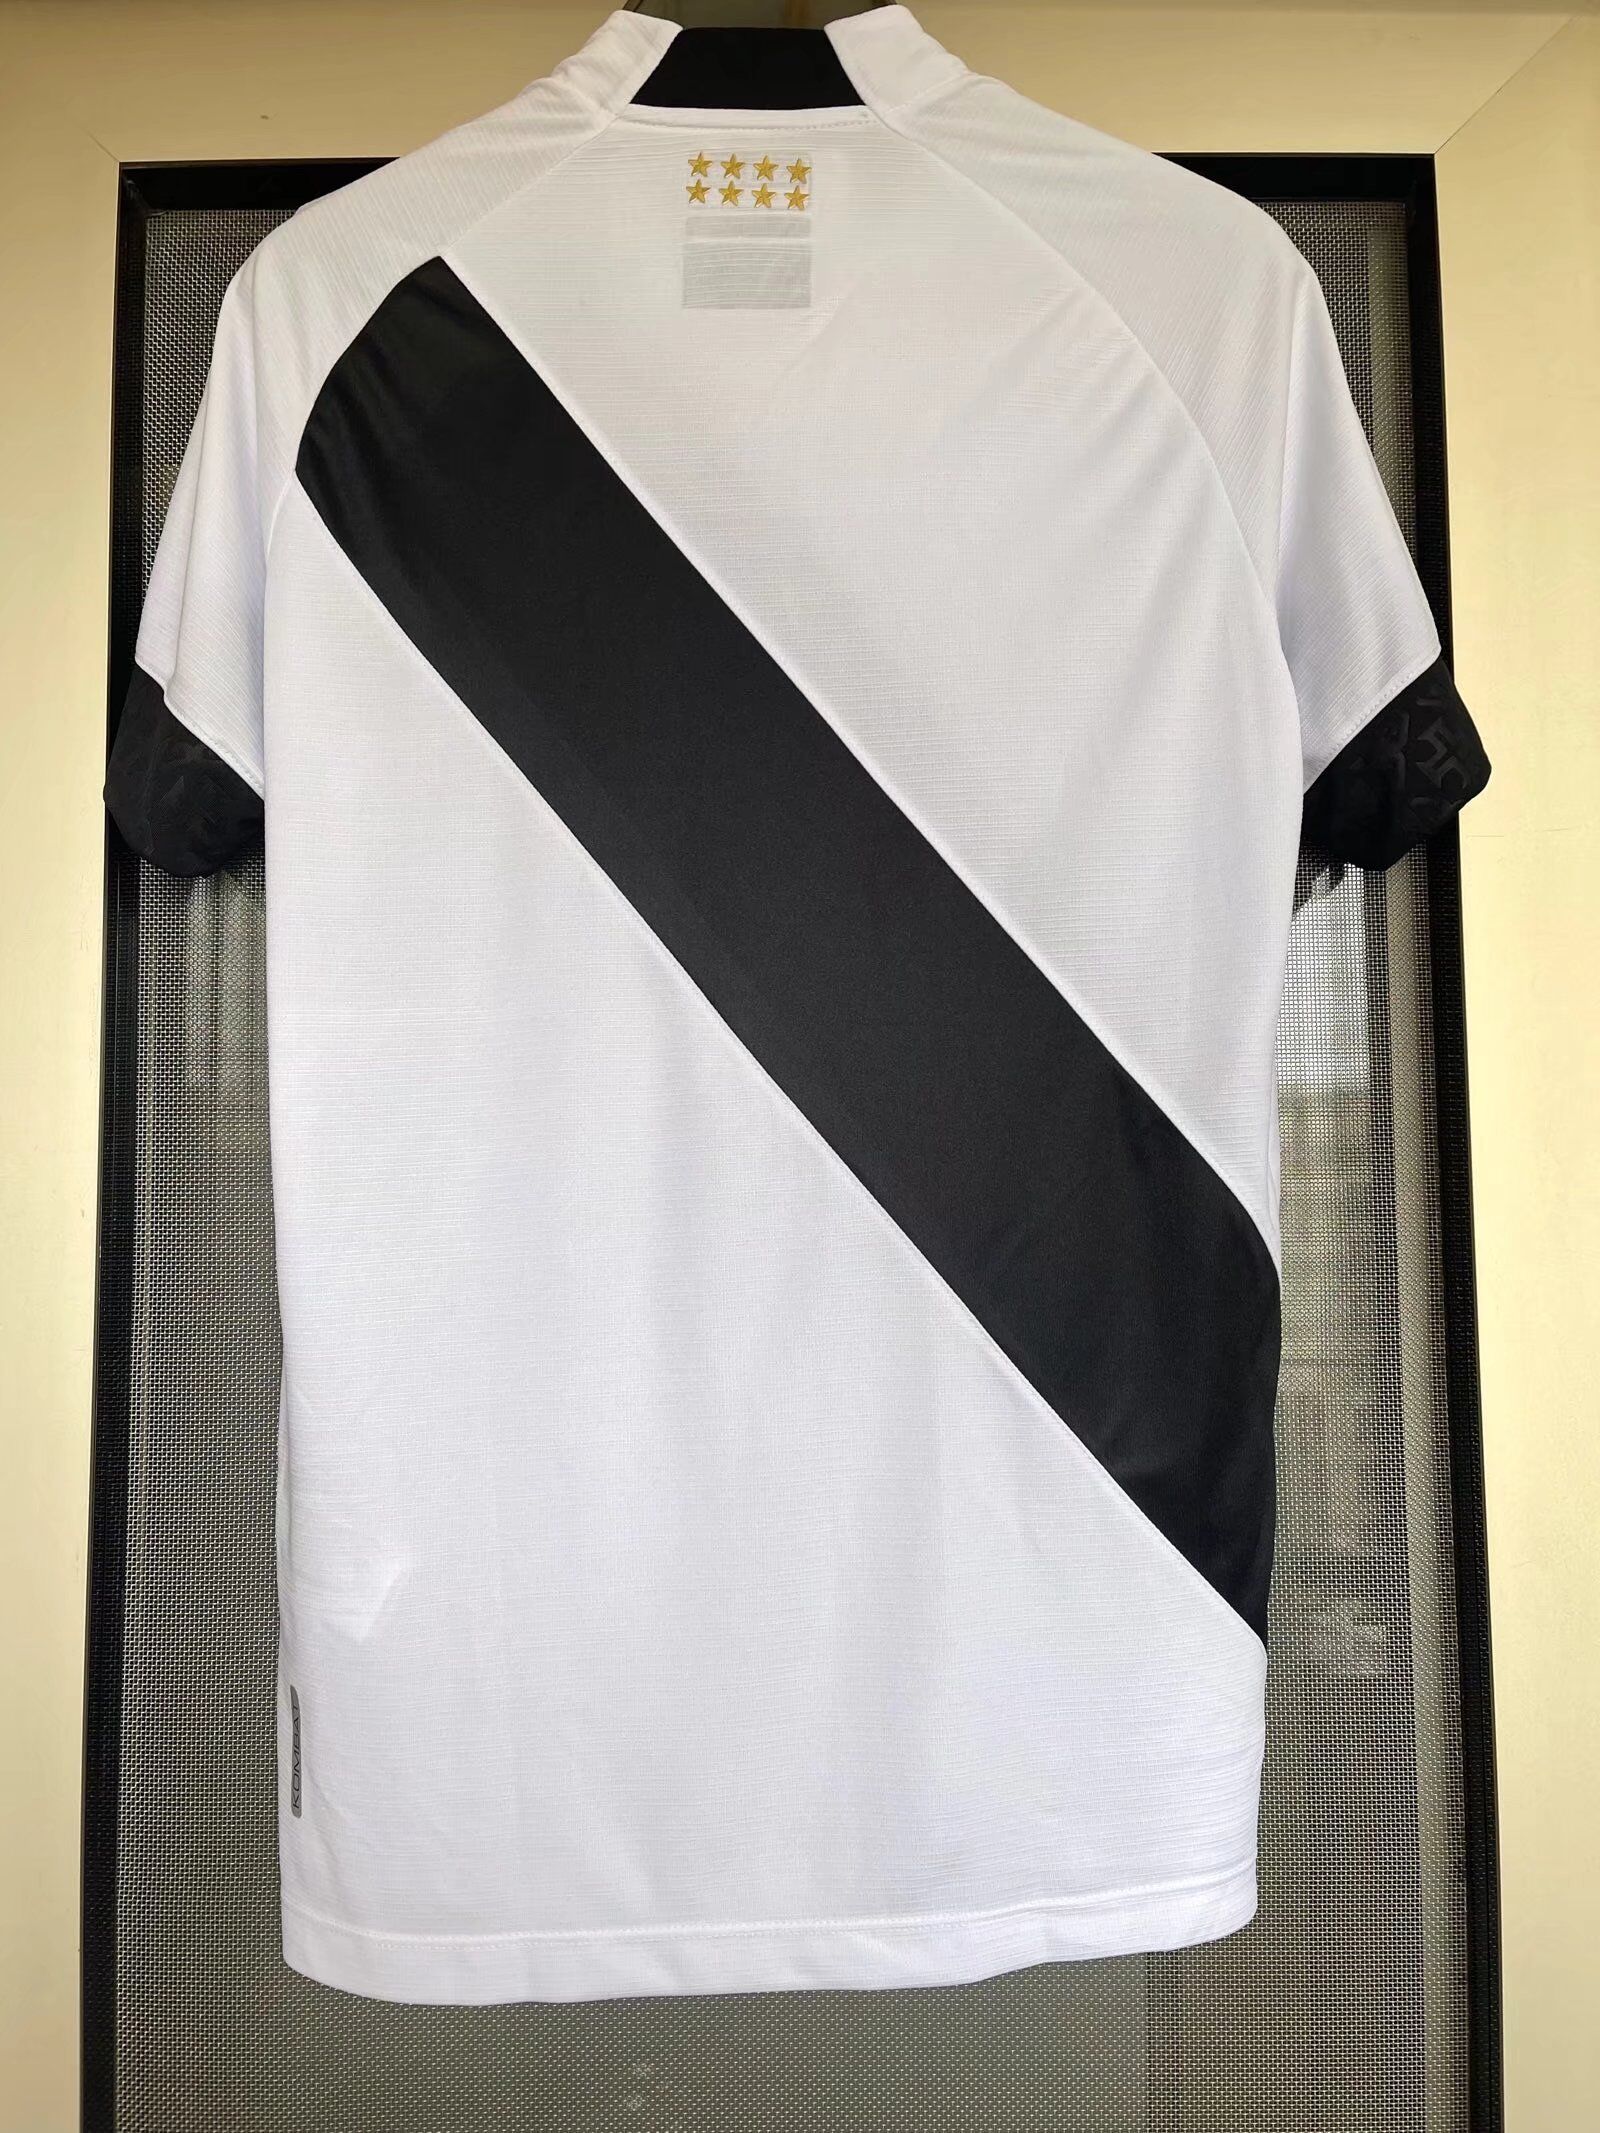 Camiseta de Fútbol Personalizada 2ª Vasco da Gama 2022/23